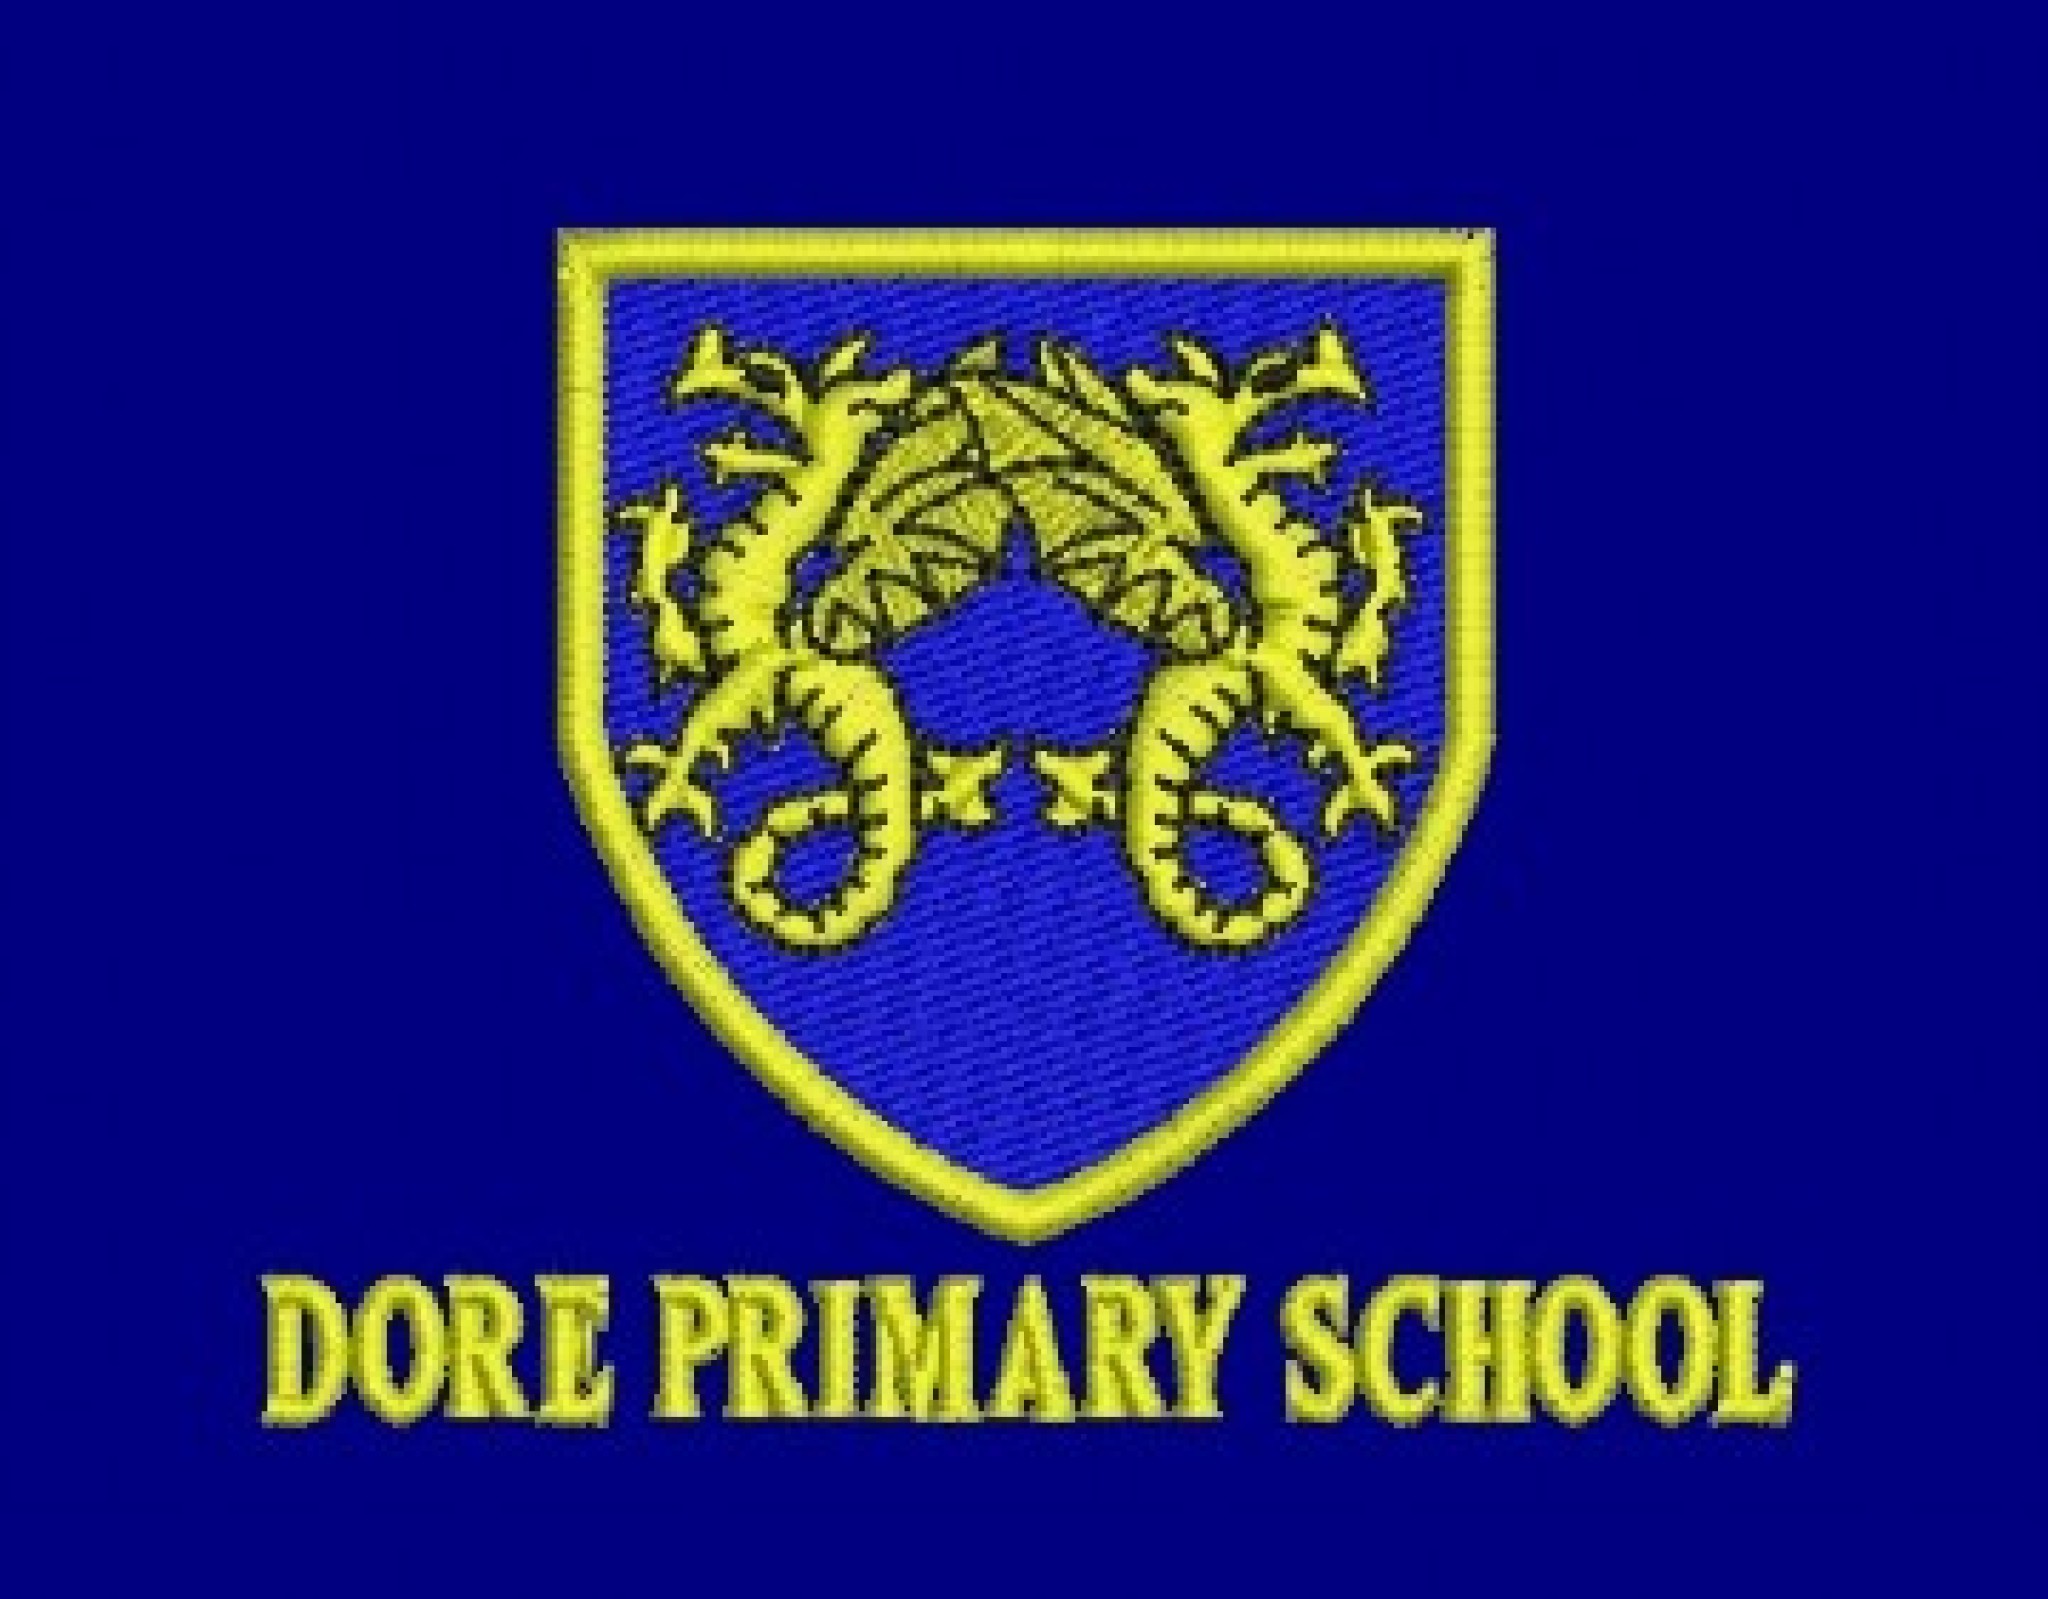 Dore Primary School.jpg